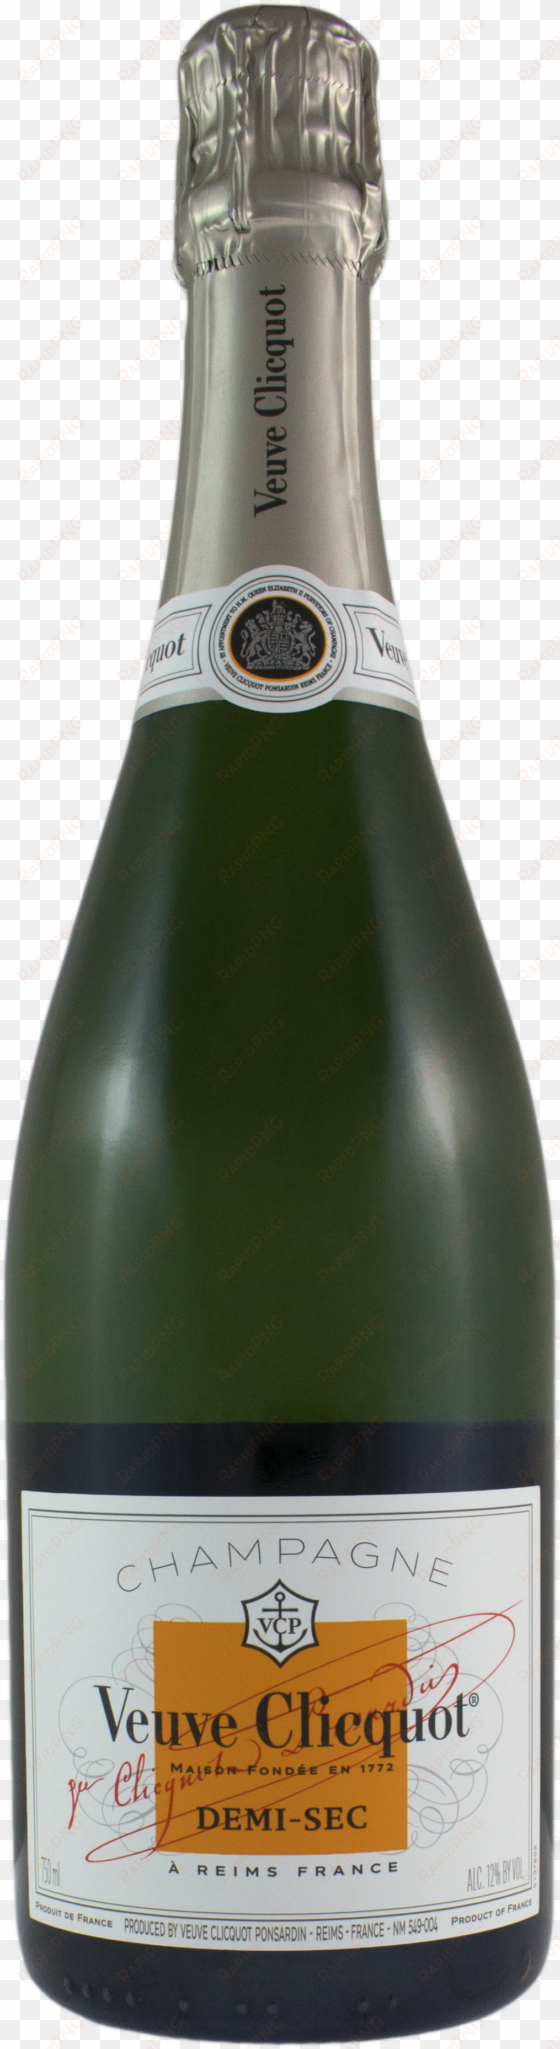 iphone label thumb - veuve clicquot brut nv champagne magnum (1.5 litre)